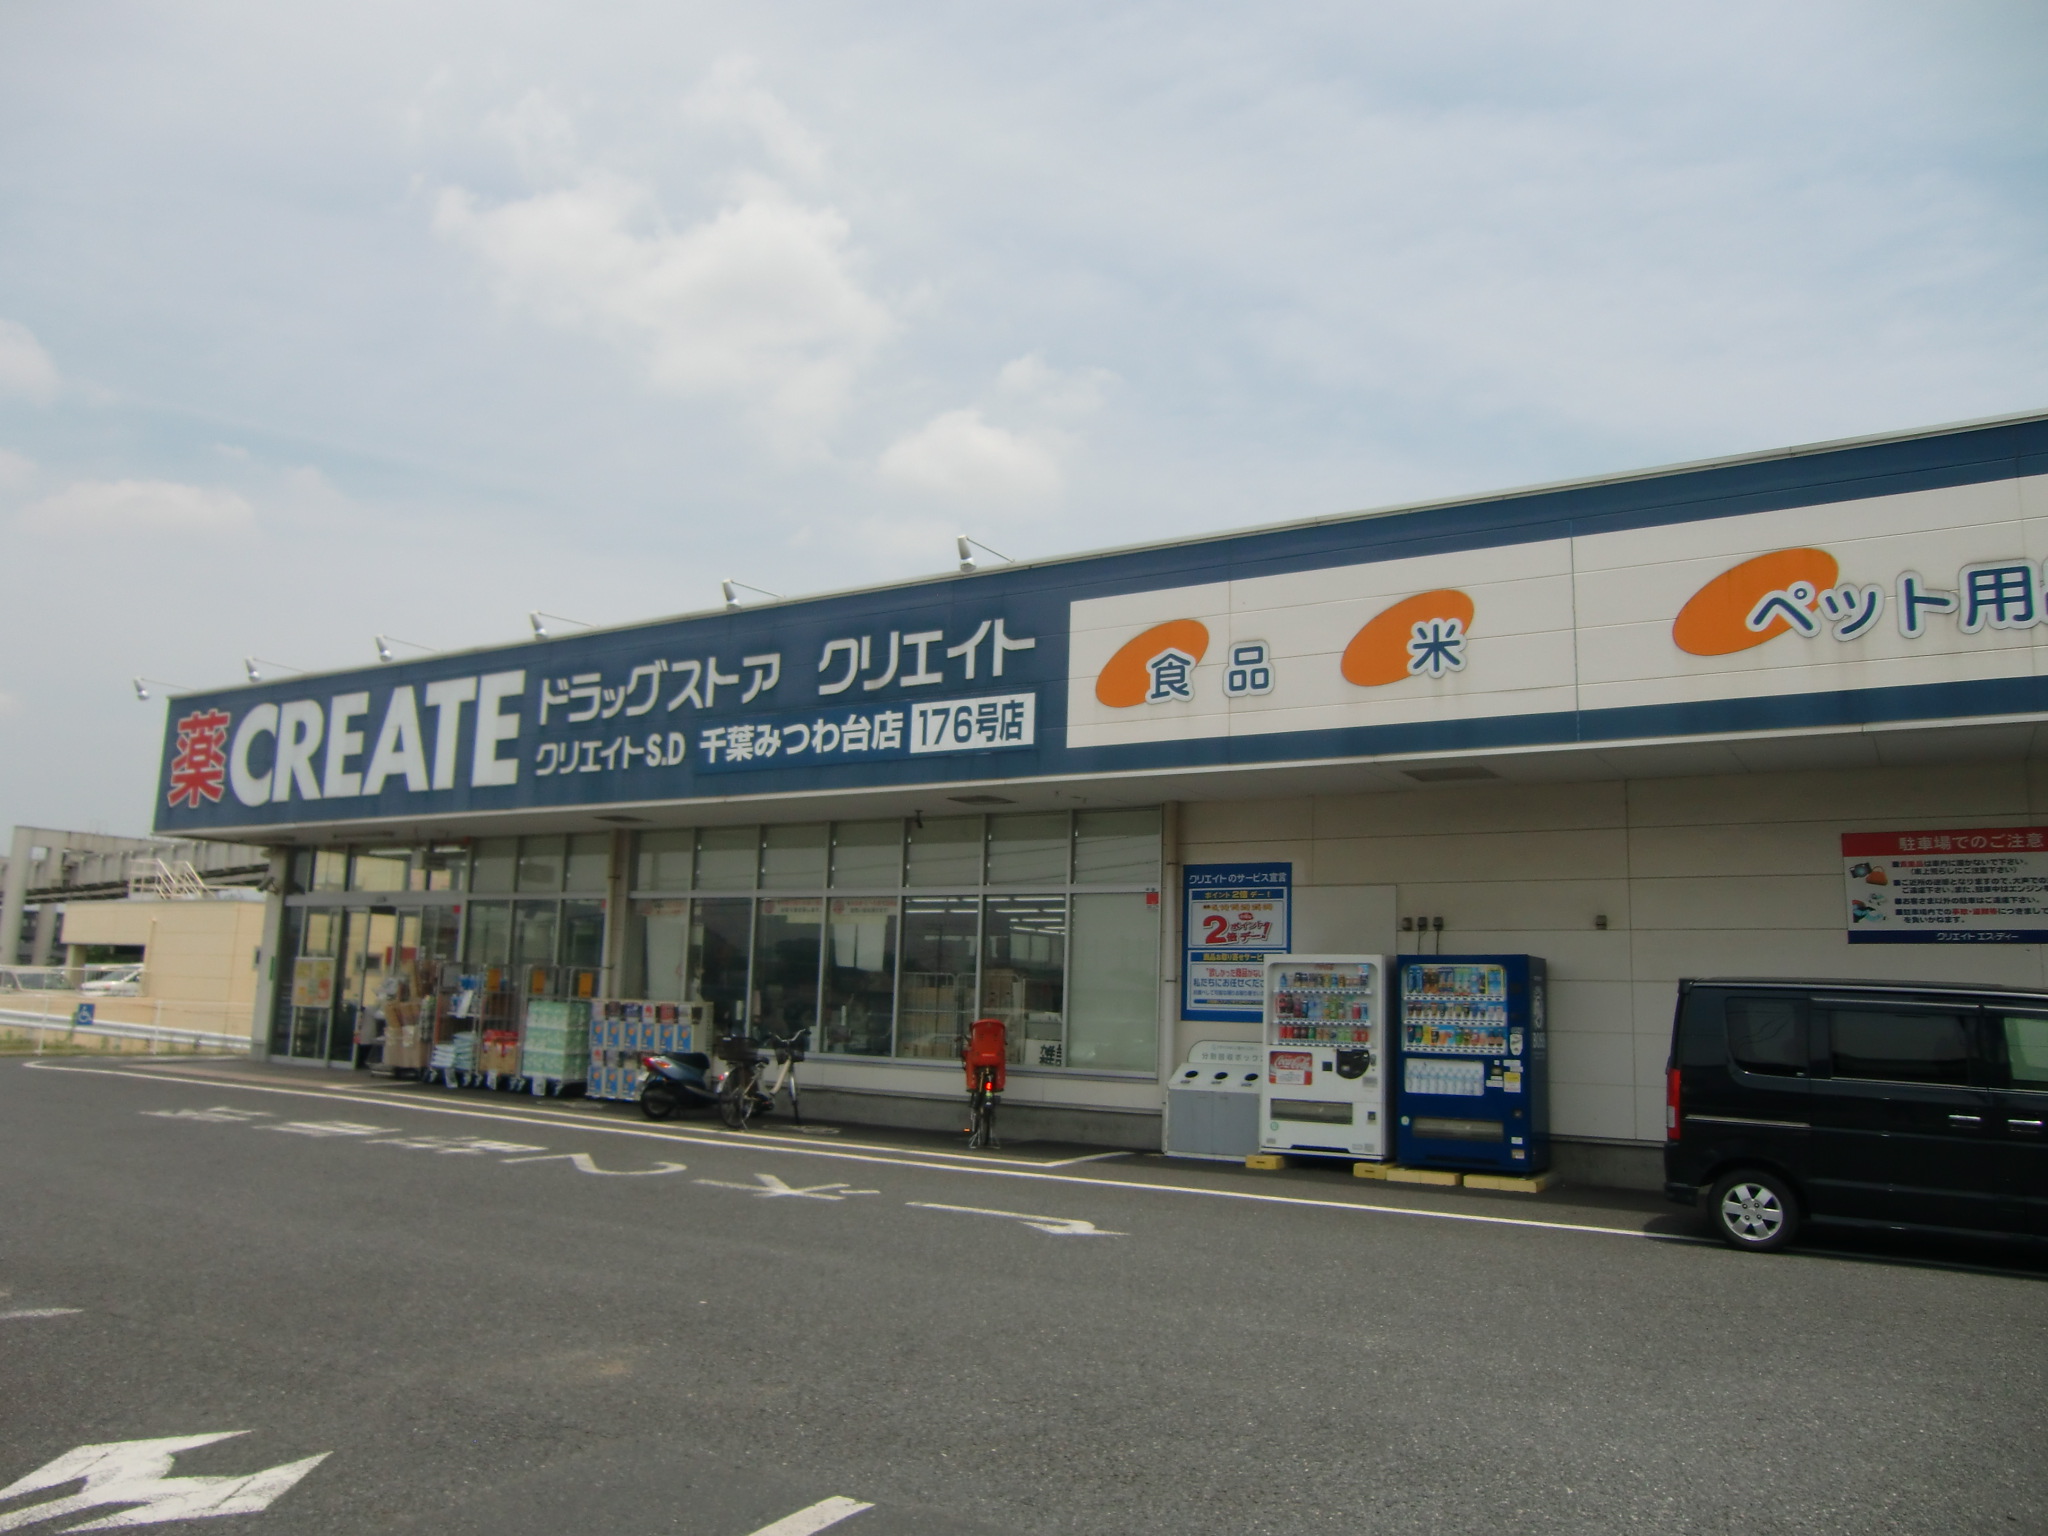 Dorakkusutoa. Create es ・ Dee Chiba Mitsuwadai shop 1183m until (drugstore)